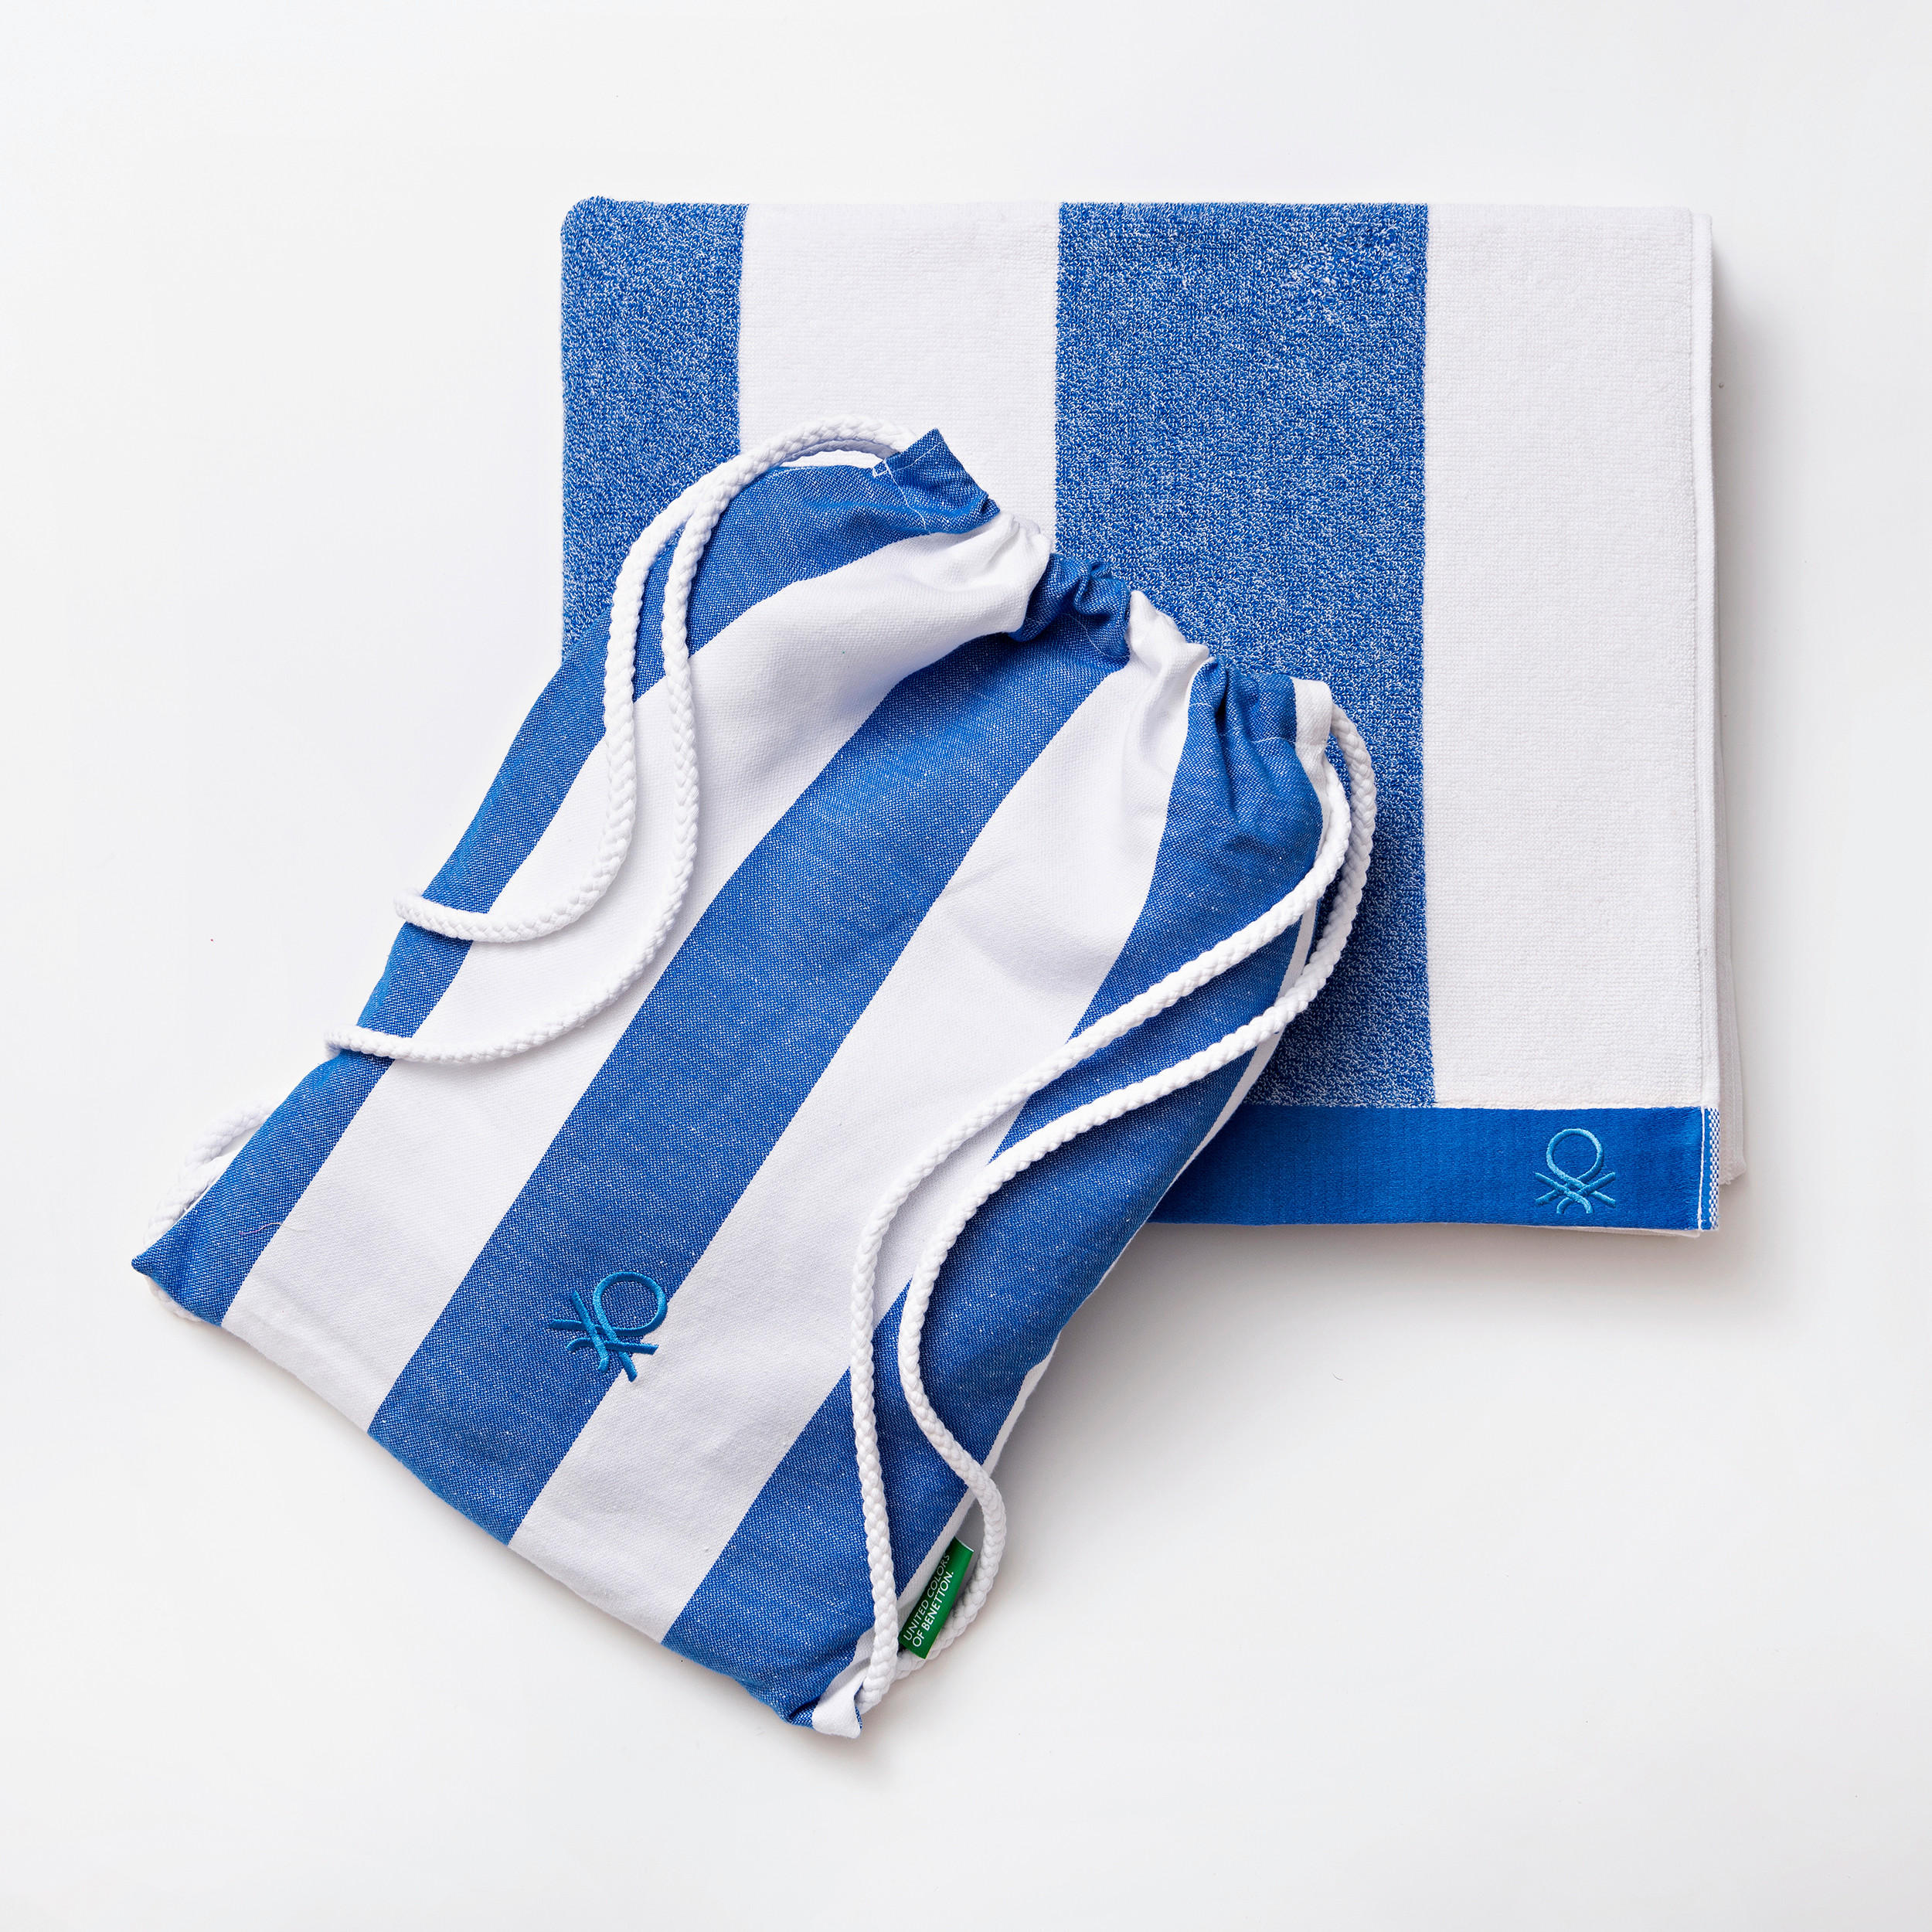 STRANDTUCH BENETTON BLAU  - Blau/Weiß, Basics, Textil (45/35/4cm) - Benetton